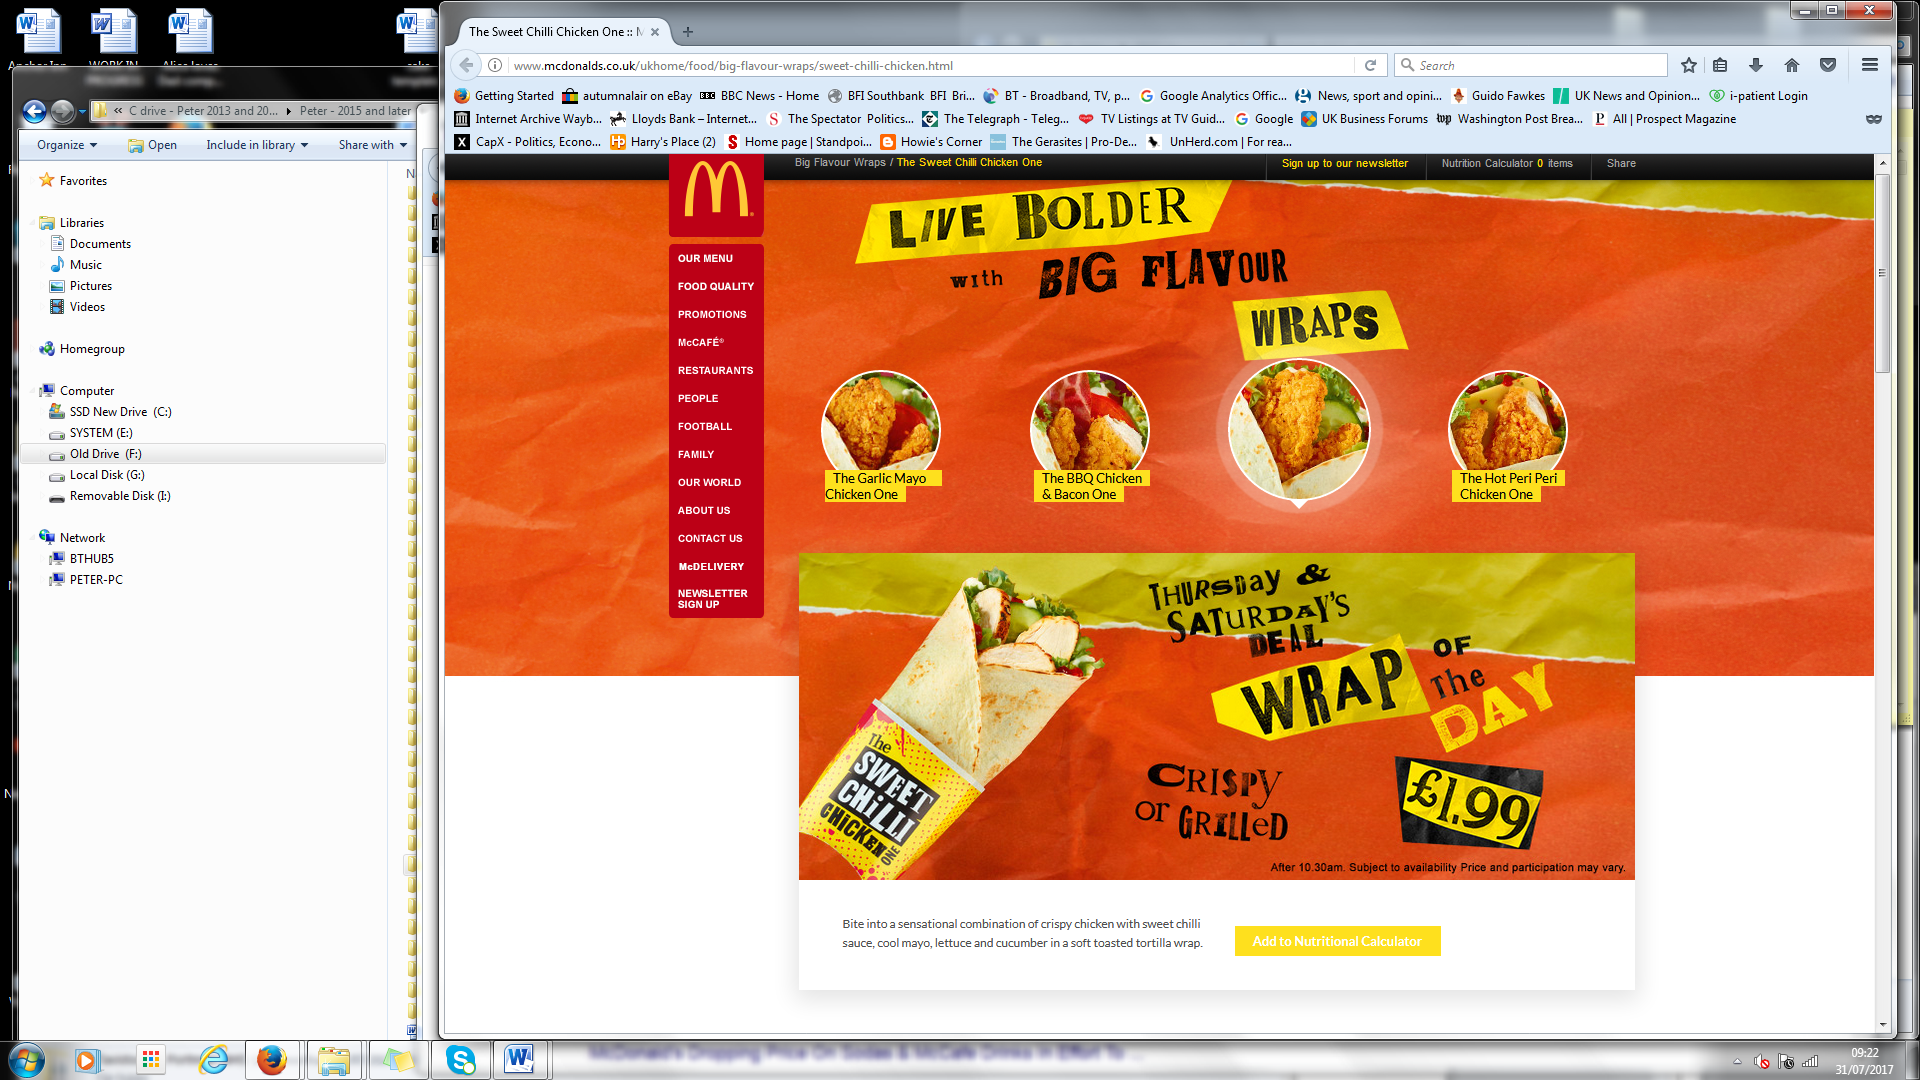 McDonalds web promotion page